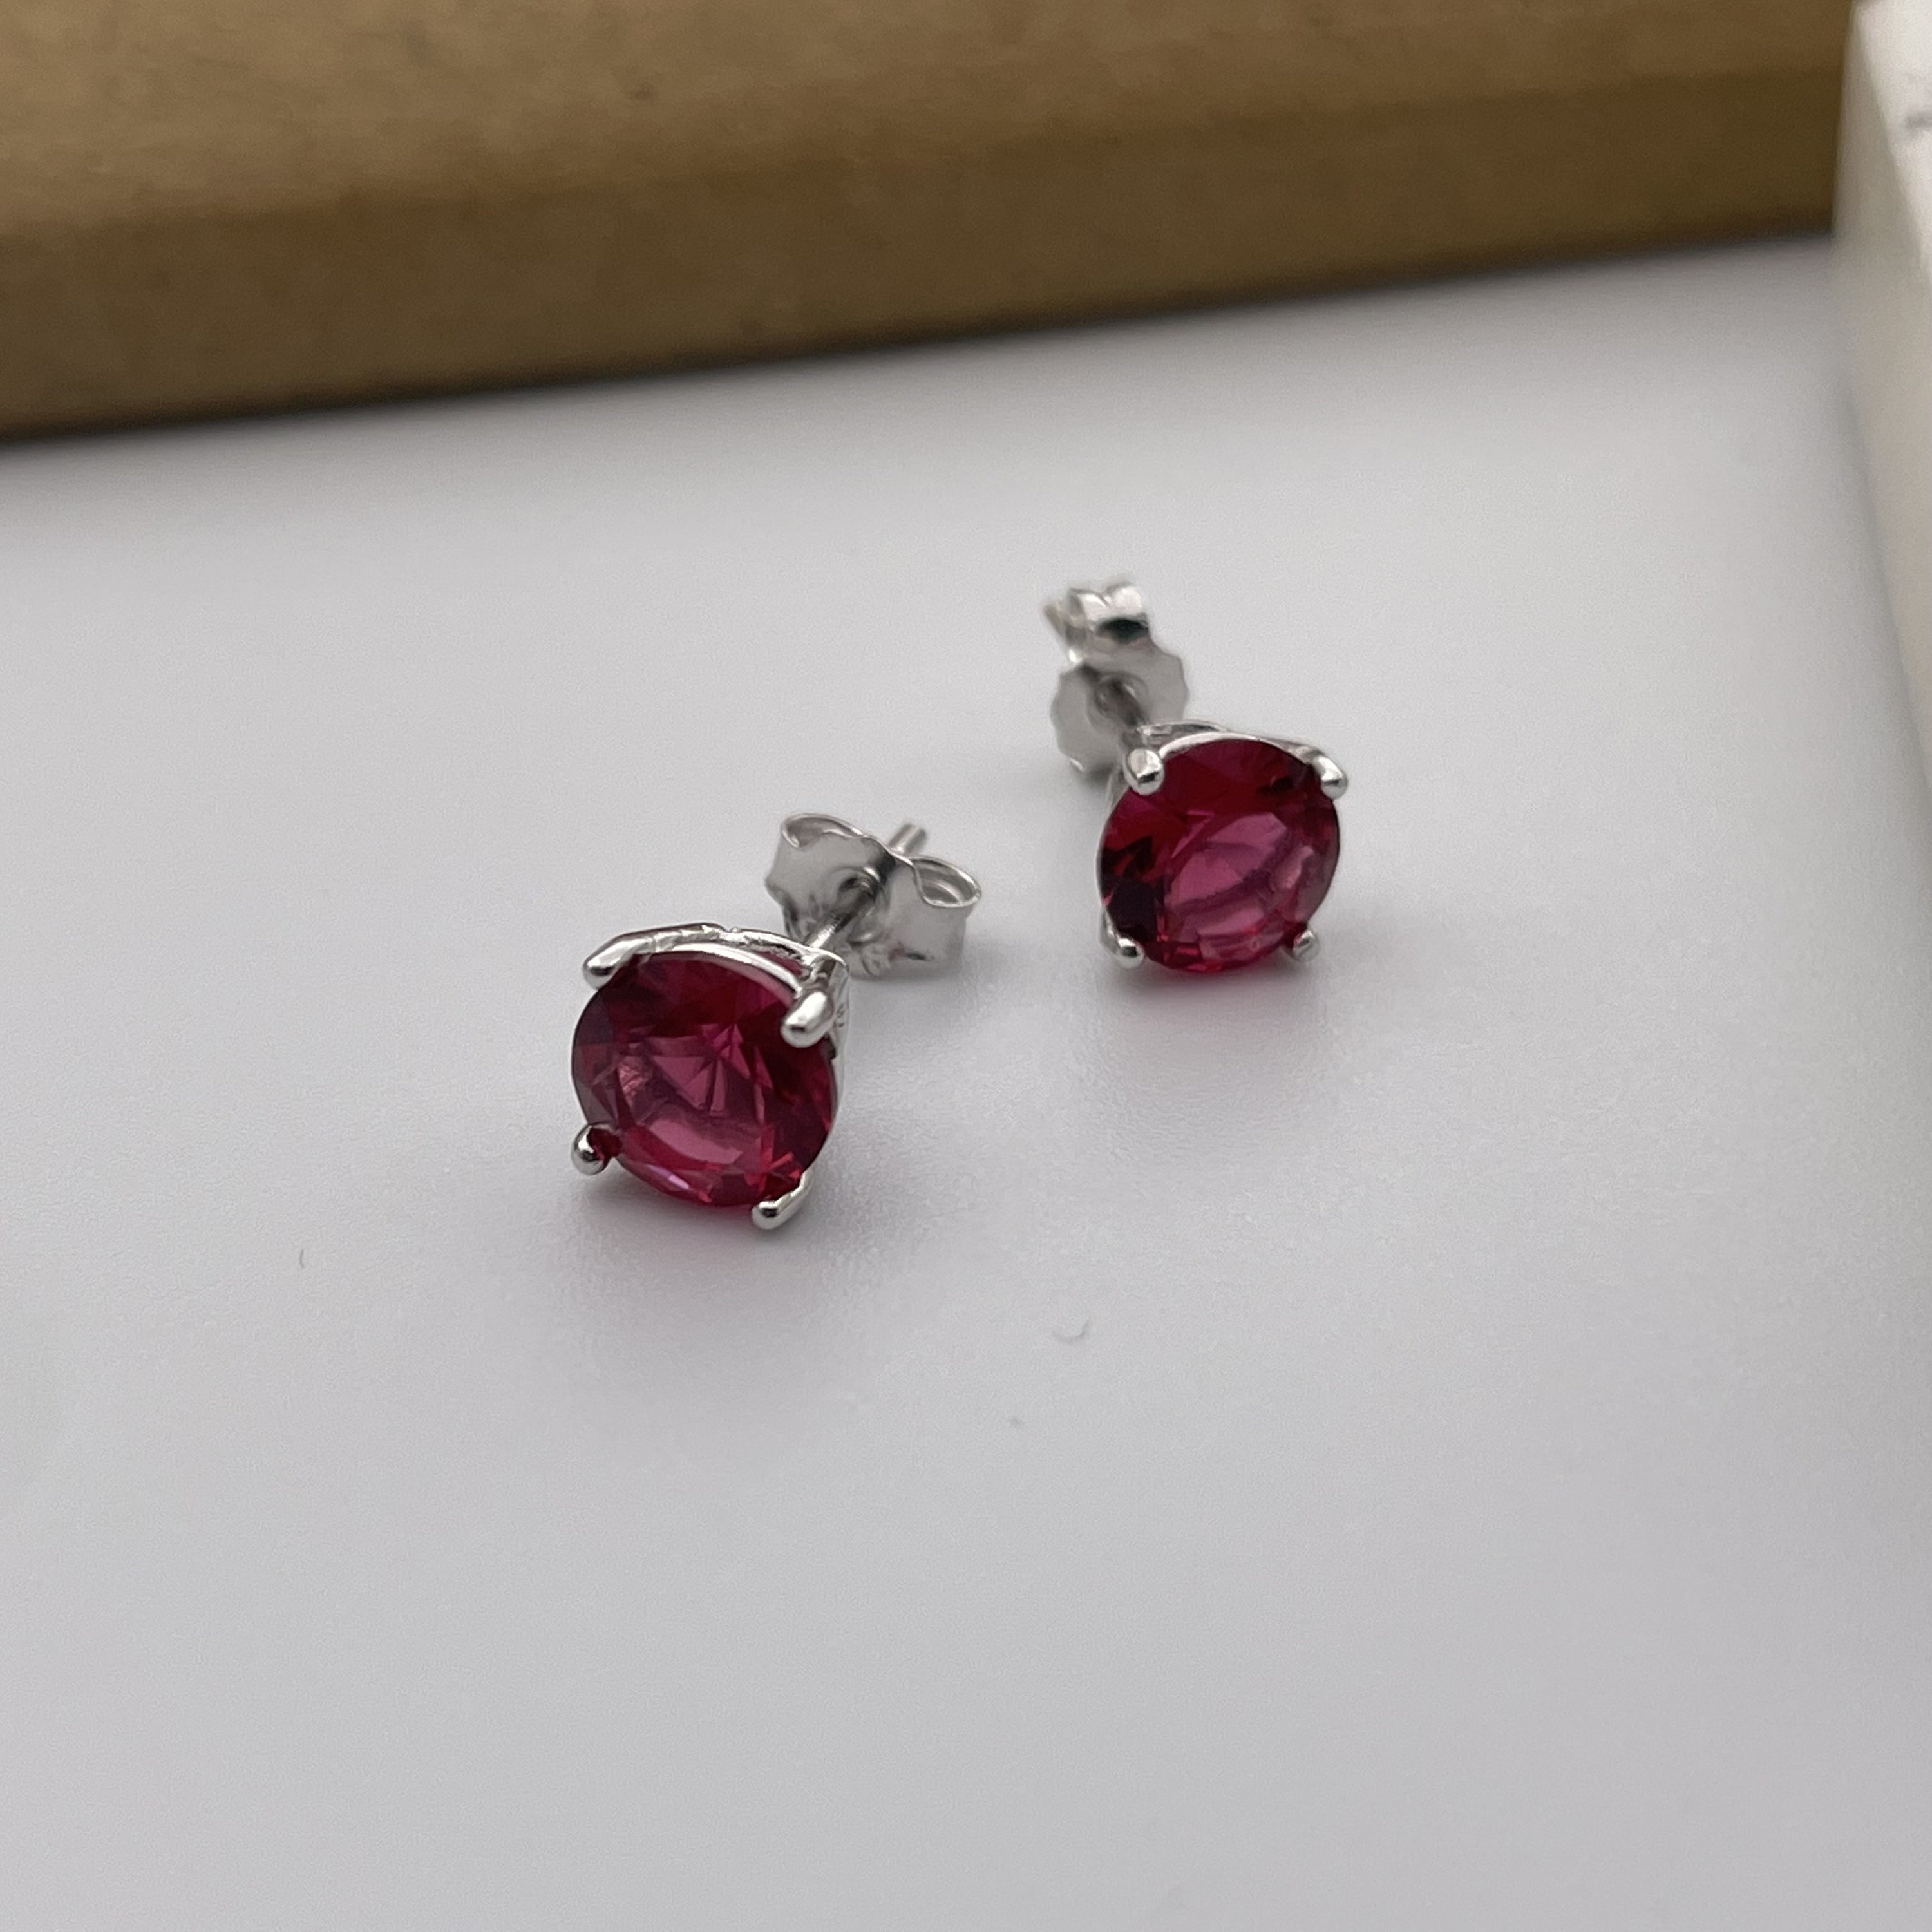 Stud earrings made of steel, black hemisphere with dark red stone |  Jewellery Eshop EU